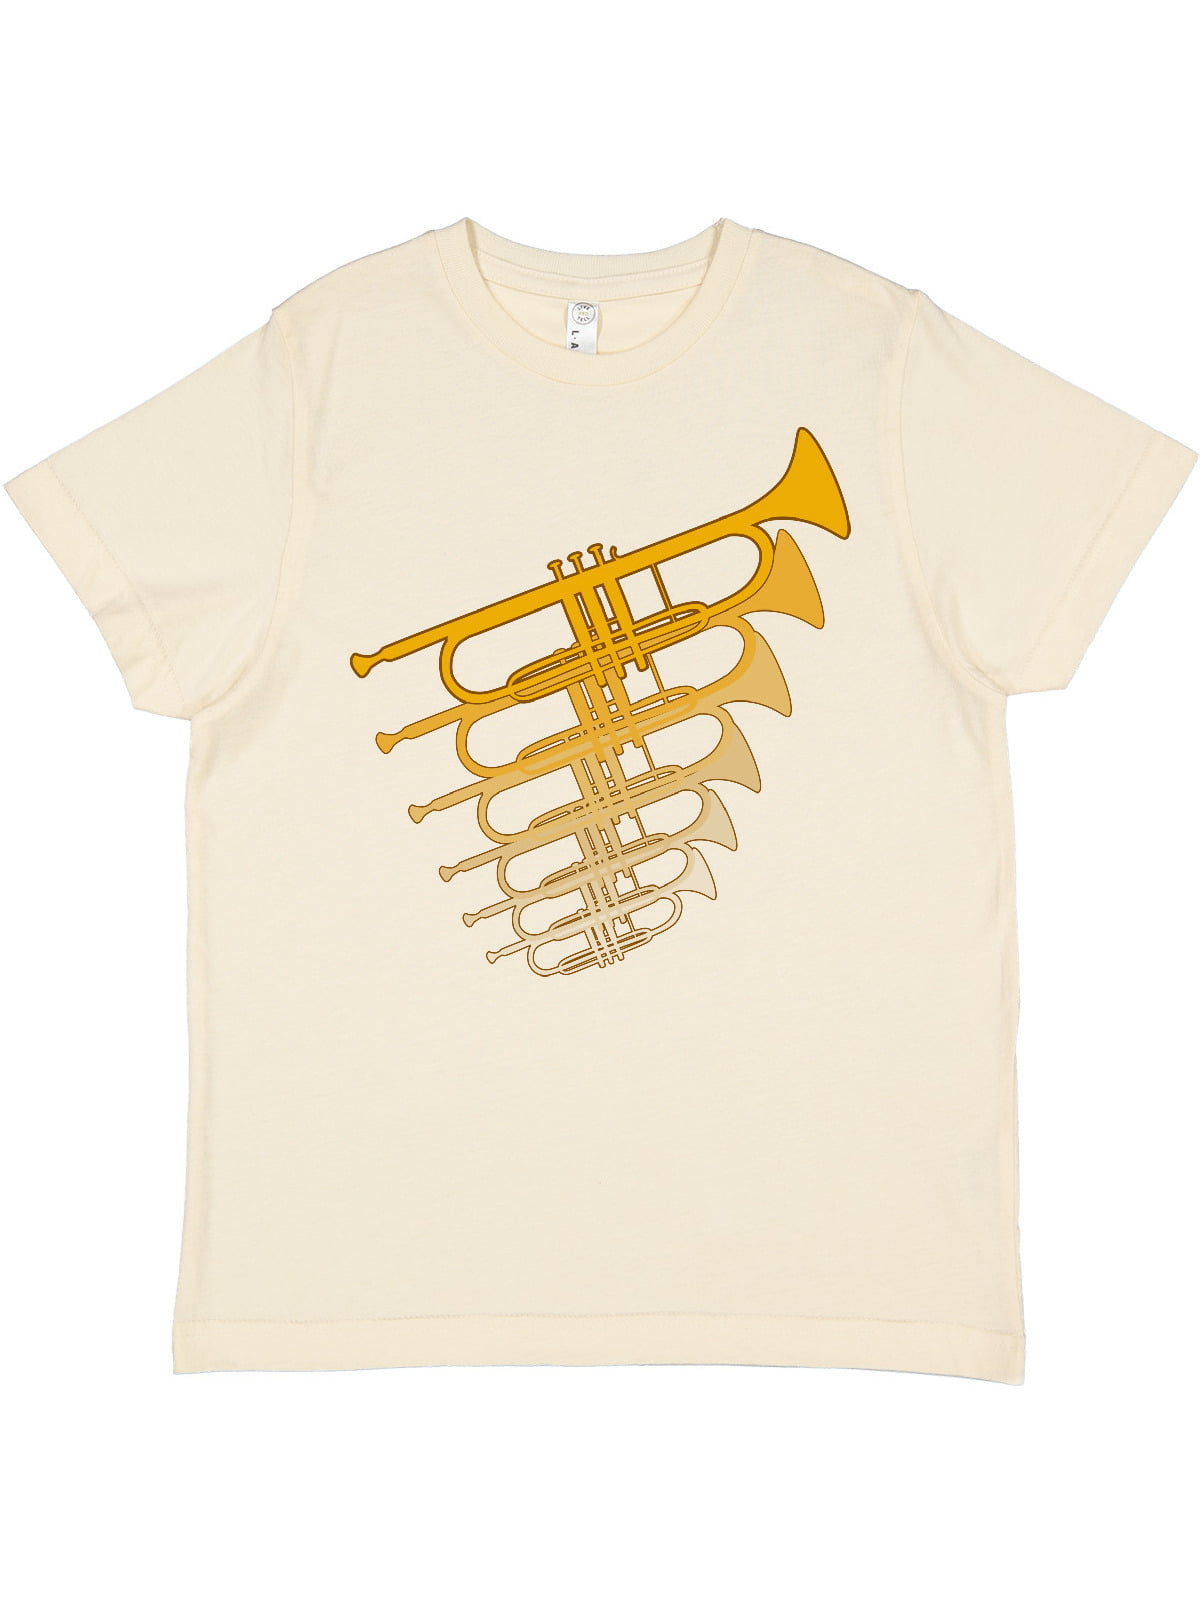 Epic Trumpet Logo Kids Tee Shirt Boys Girls Unisex 2T-XL 